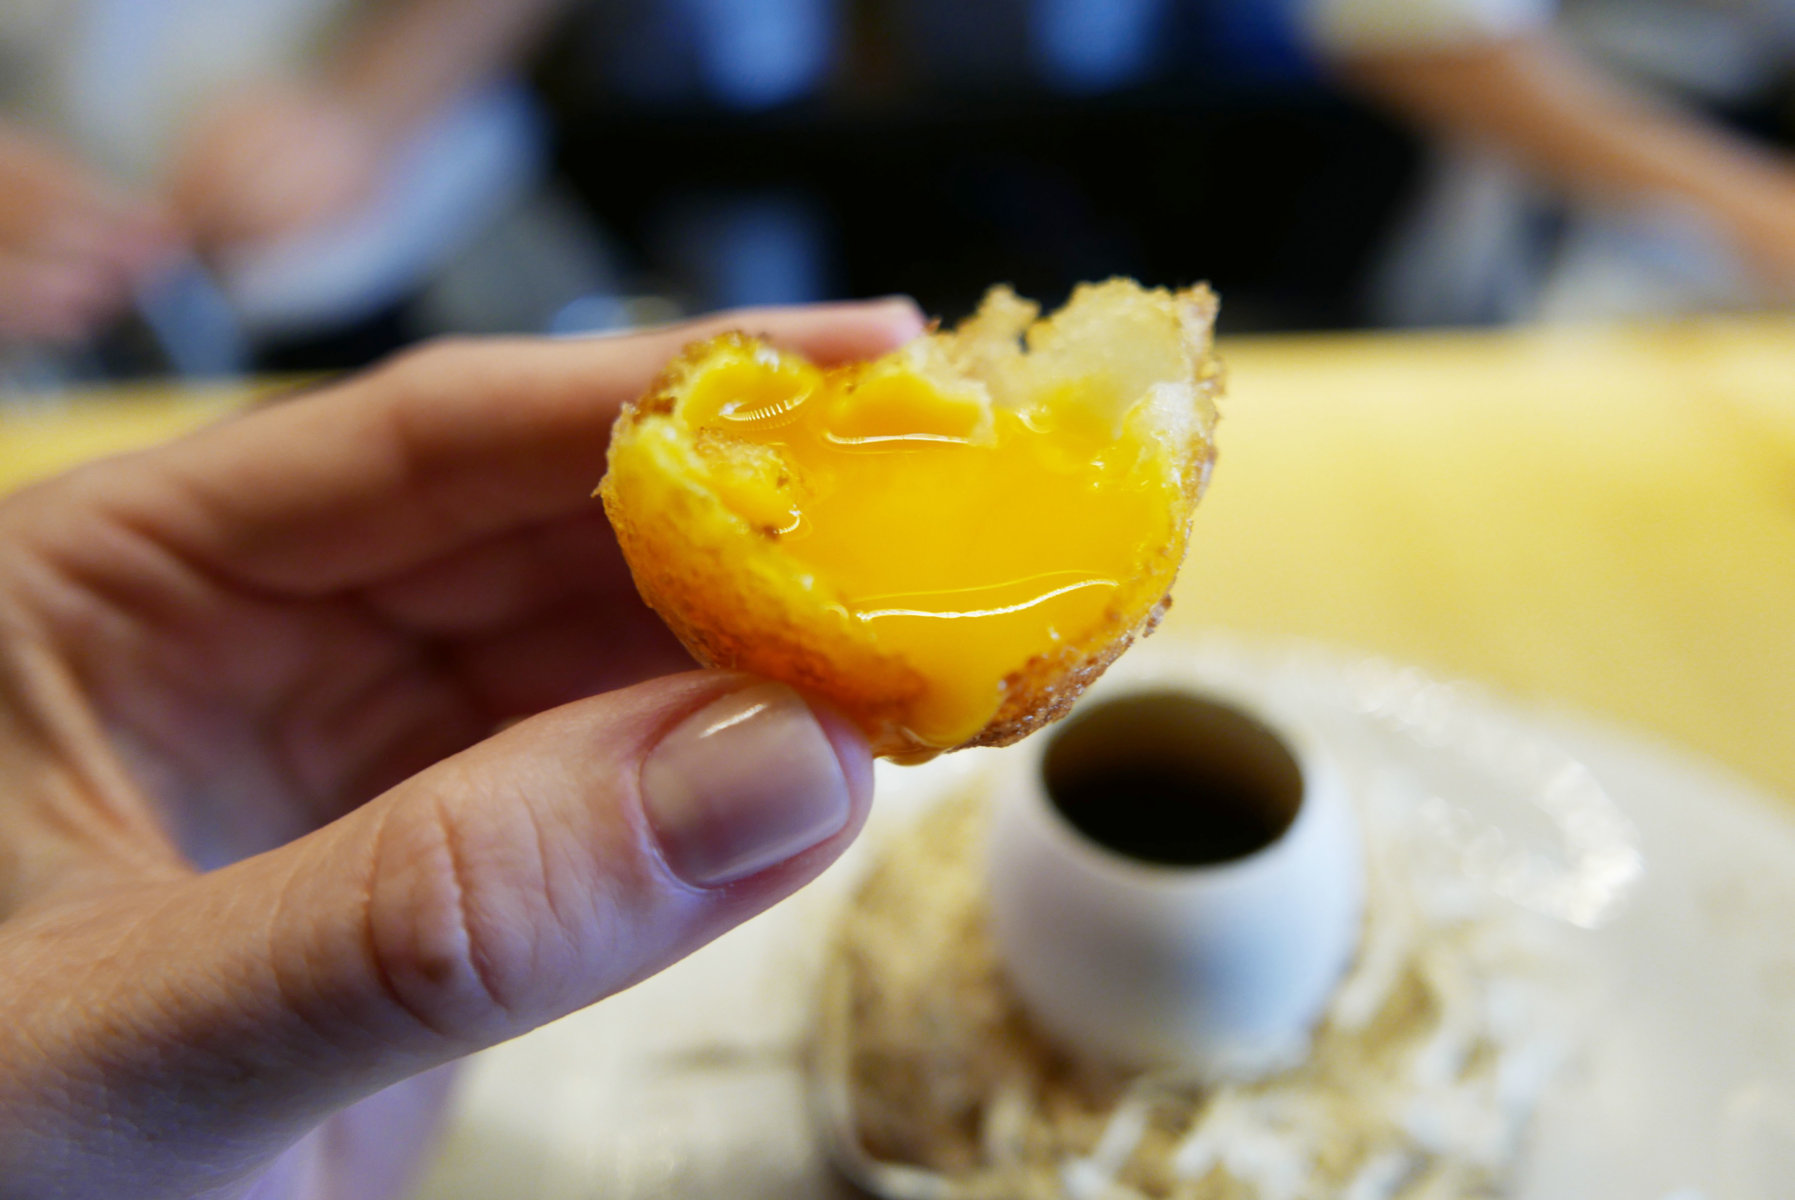 Crsipy egg yolk with mushroom gelatine